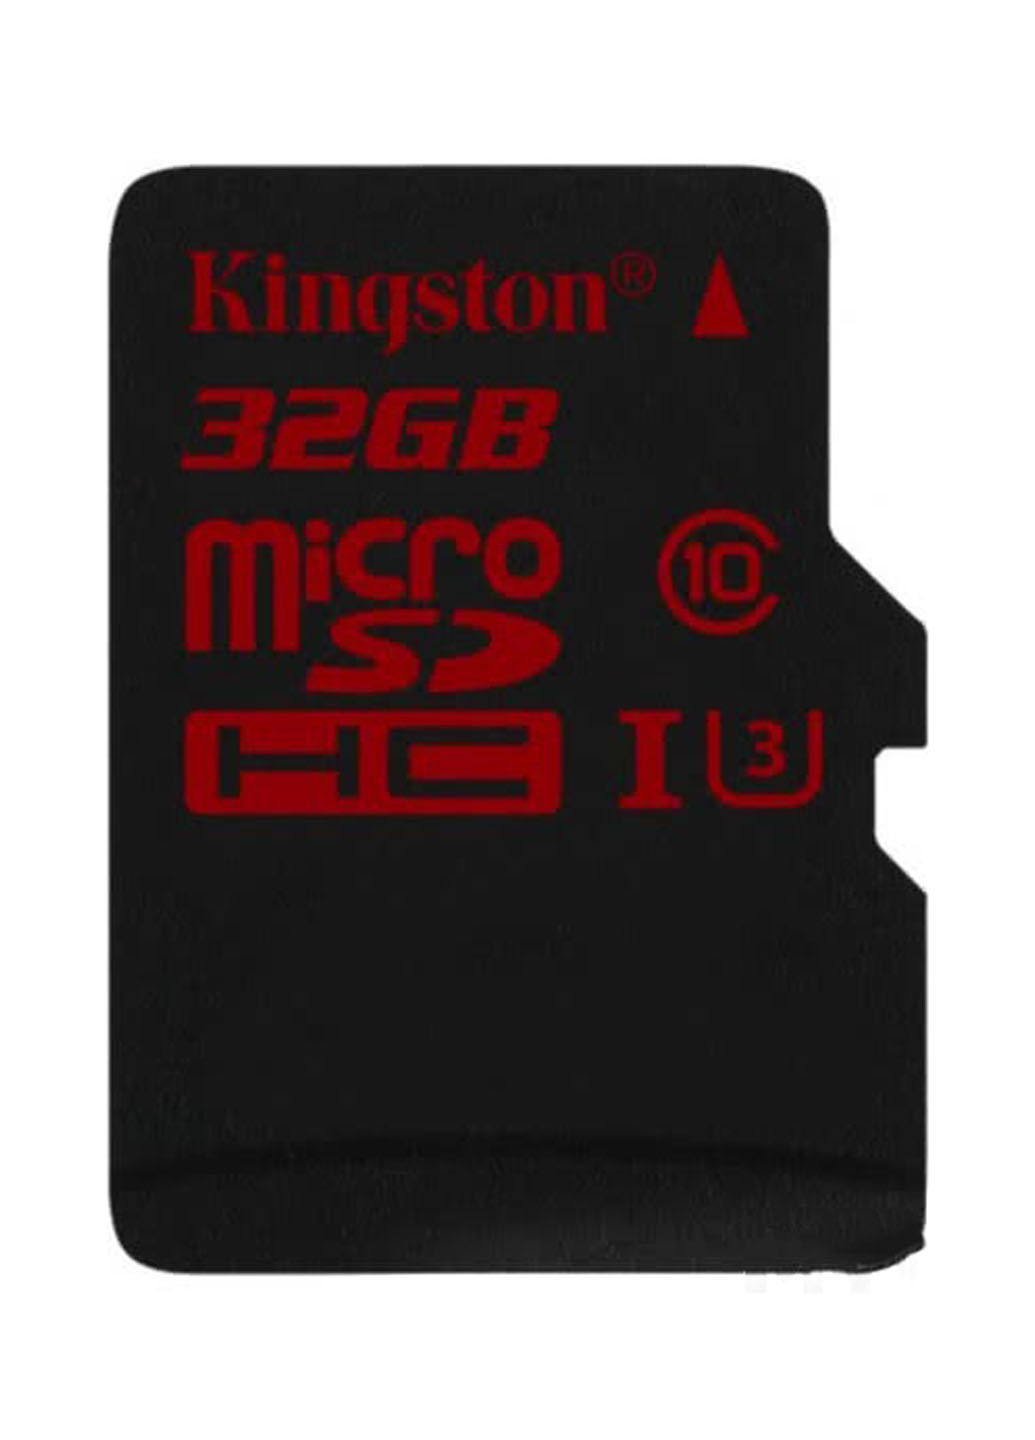 Карта памяти microSDHC 32GB Canvas React C10 UHS-I U3 V30 (SDCR/32GBSP) Kingston карта памяти kingston microsdhc 32gb canvas react c10 uhs-i u3 v30 (sdcr/32gbsp) (136711357)